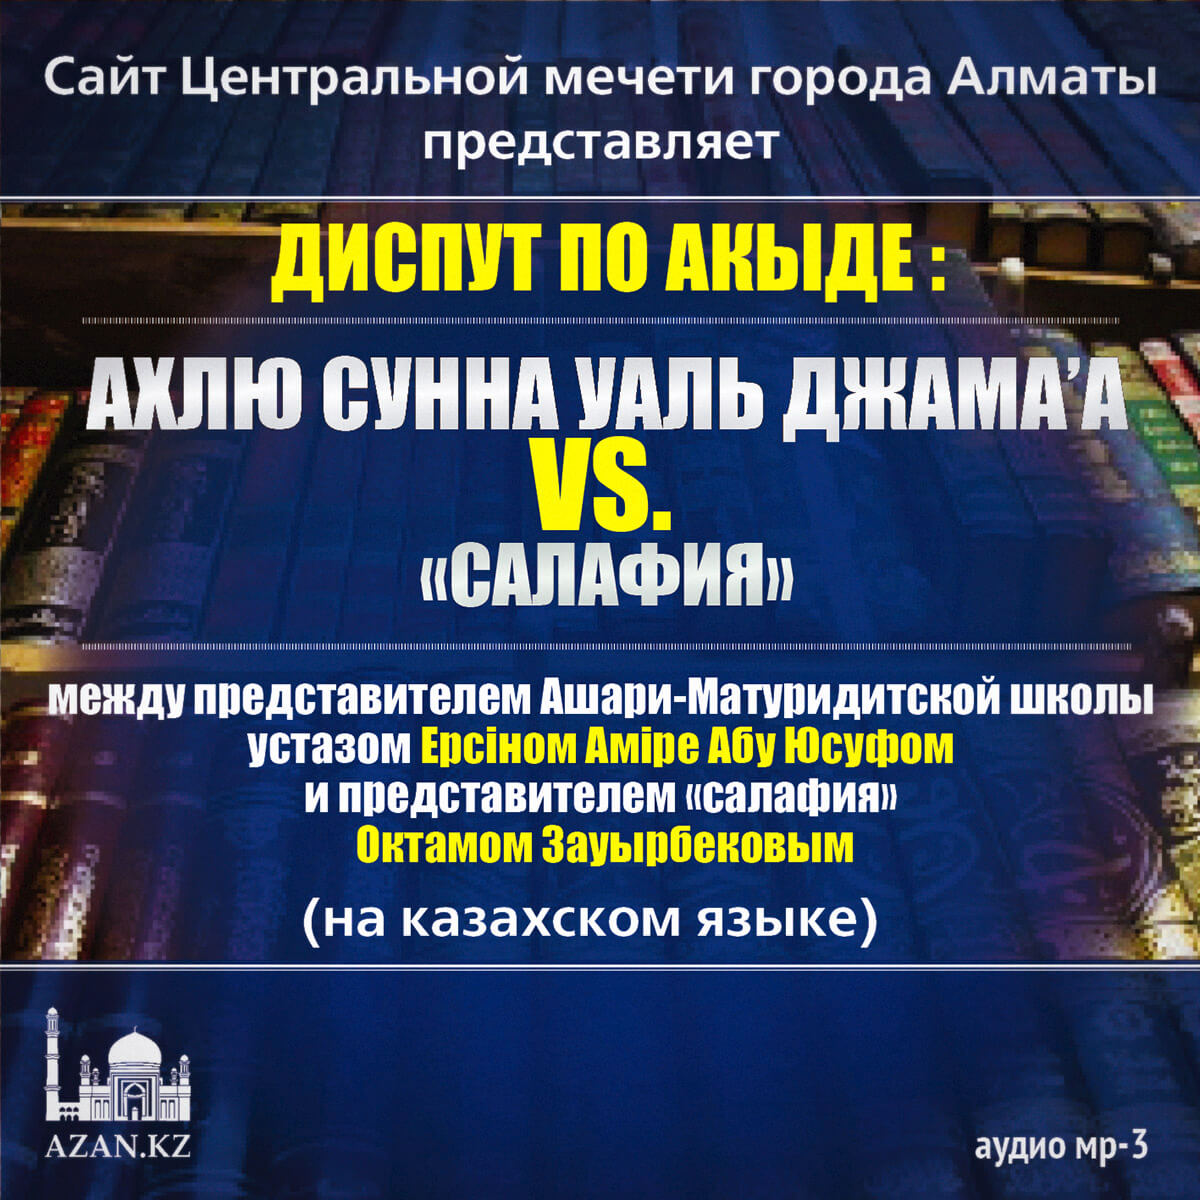 Диспут по акыде: Ахлю Cунна уаль Джамаа vs. Салафия (на казахском языке)